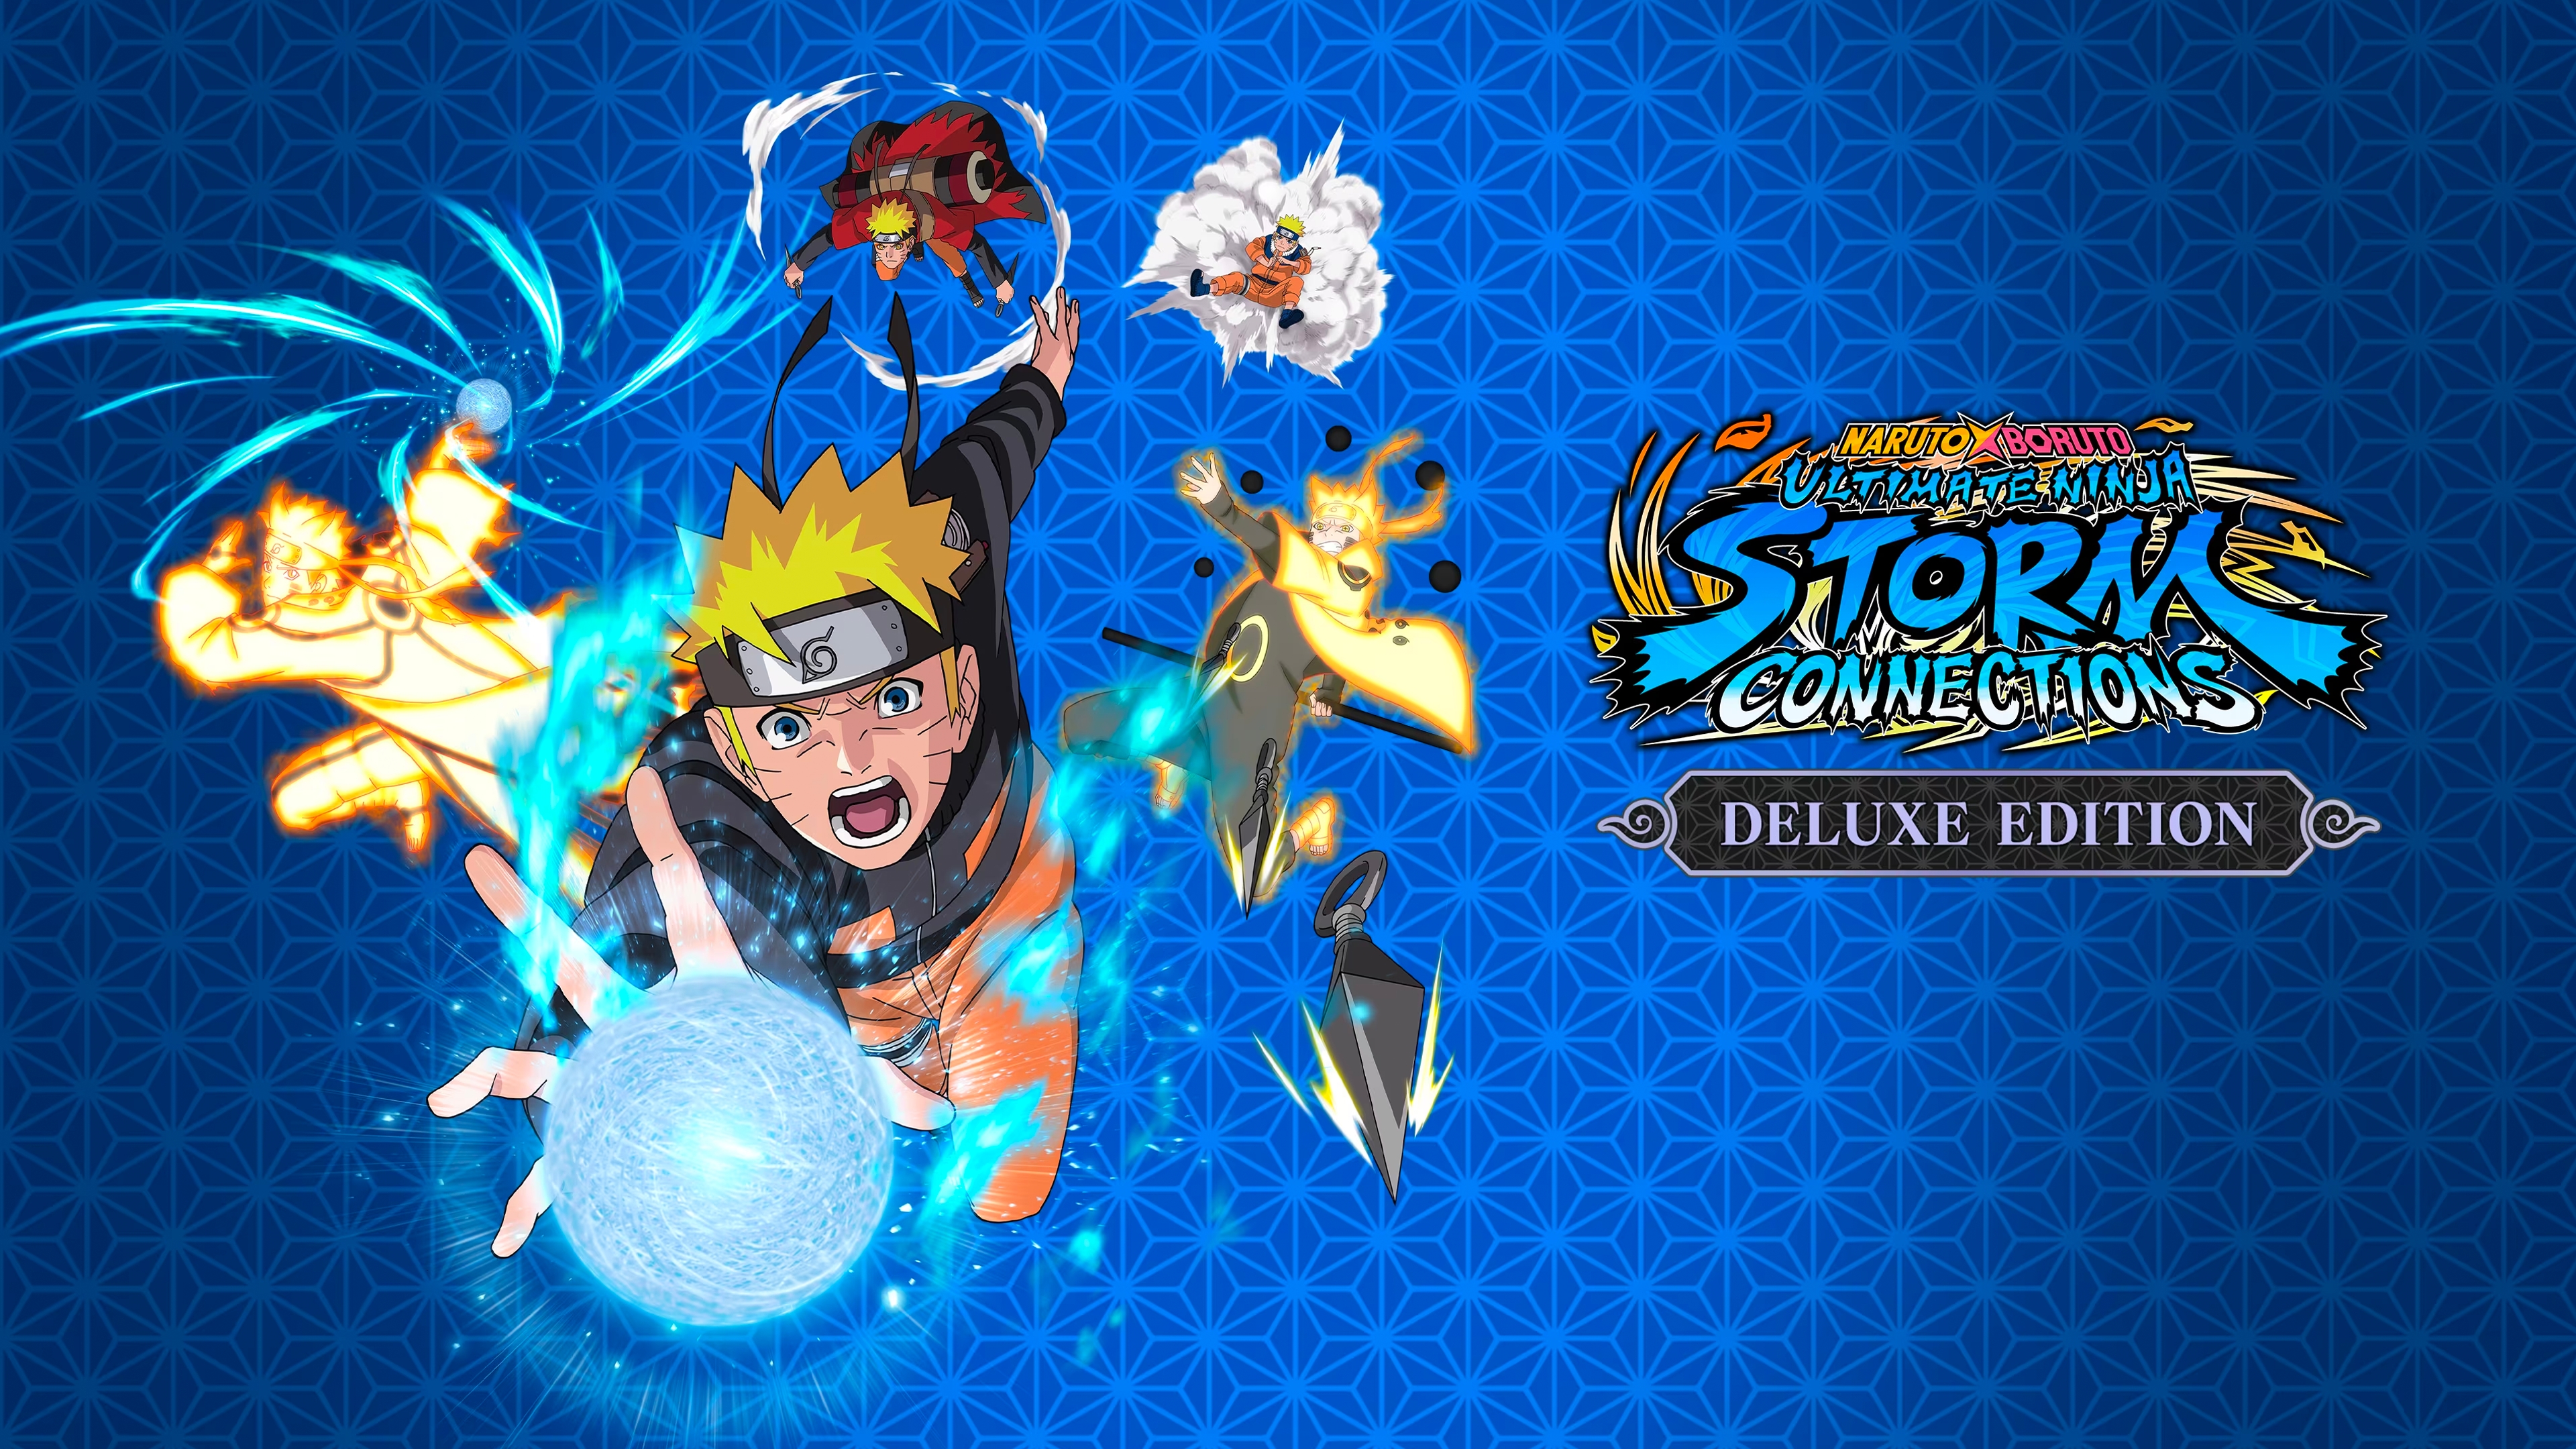 Jogo Naruto: Ultimate Ninja Storm - Xbox 25 Dígitos Código Digital